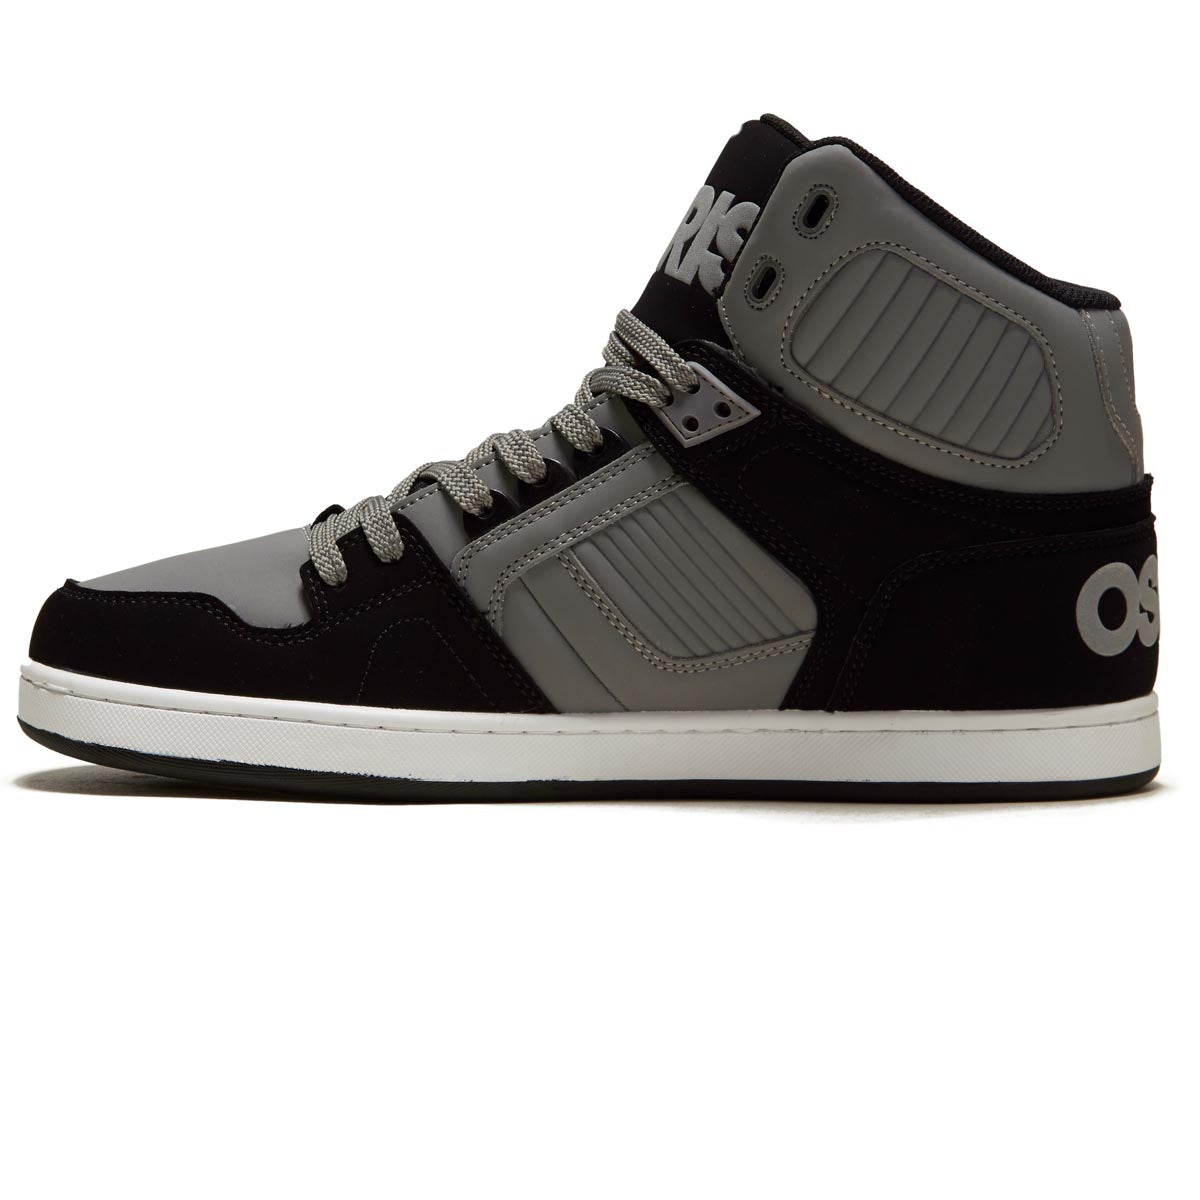 Osiris Nyc 83 Clk Shoes - Black/Grey/White image 2